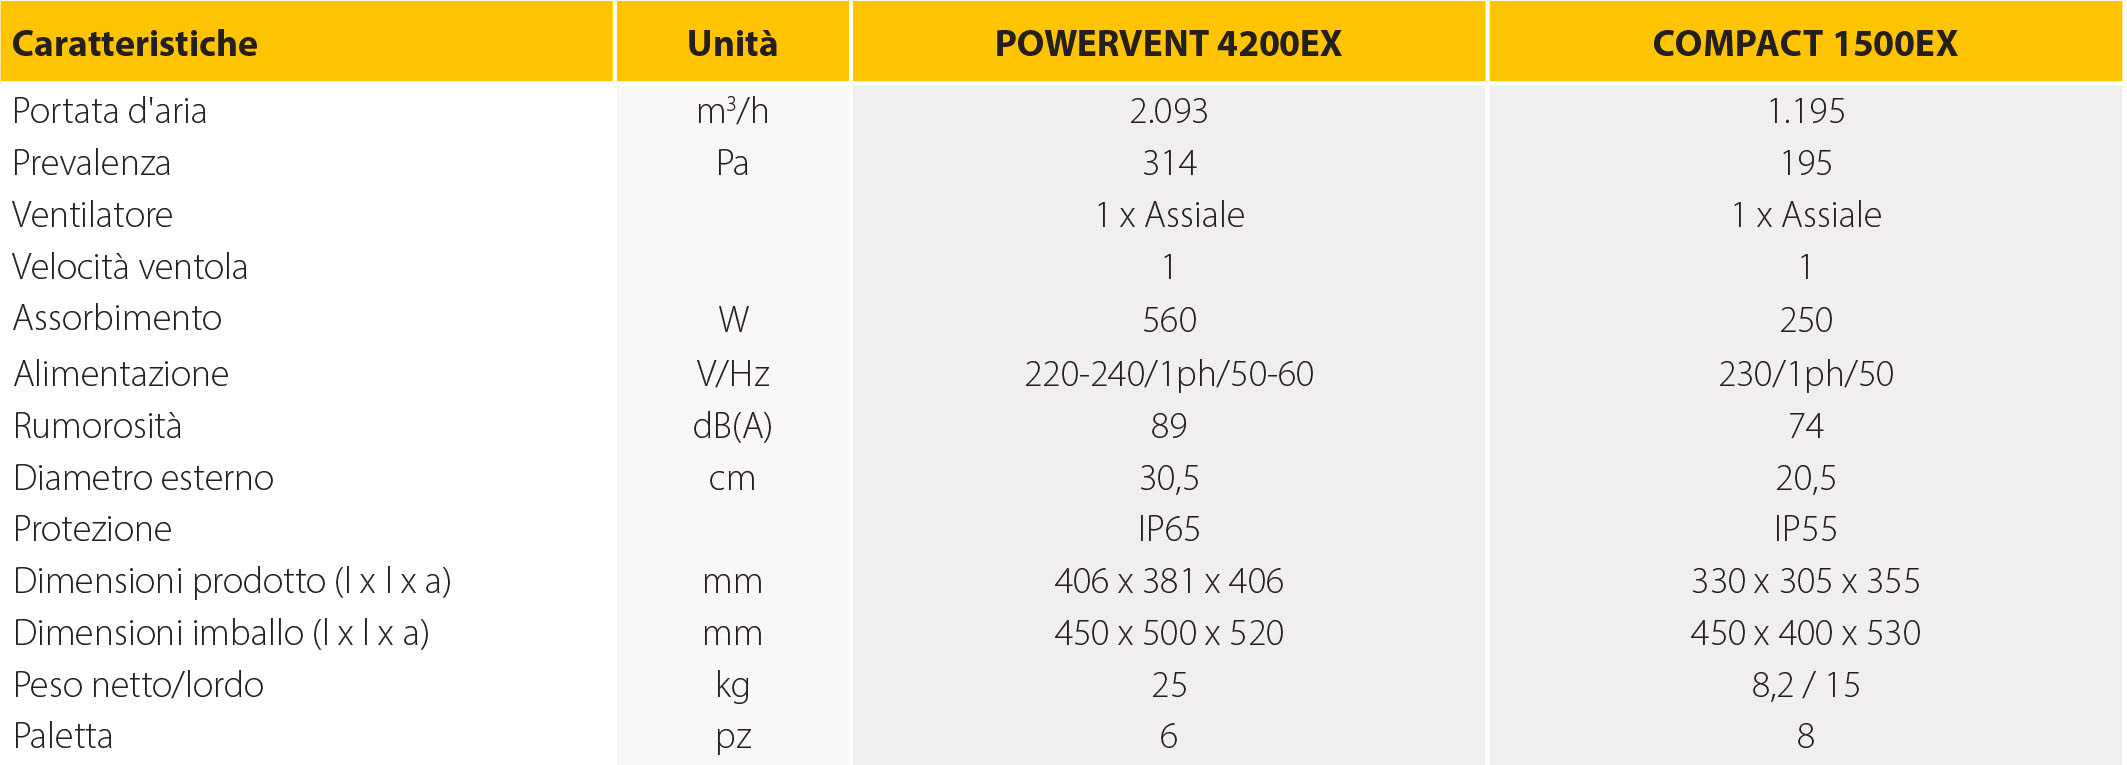 Powervent 4200ex - Compact 1500ex